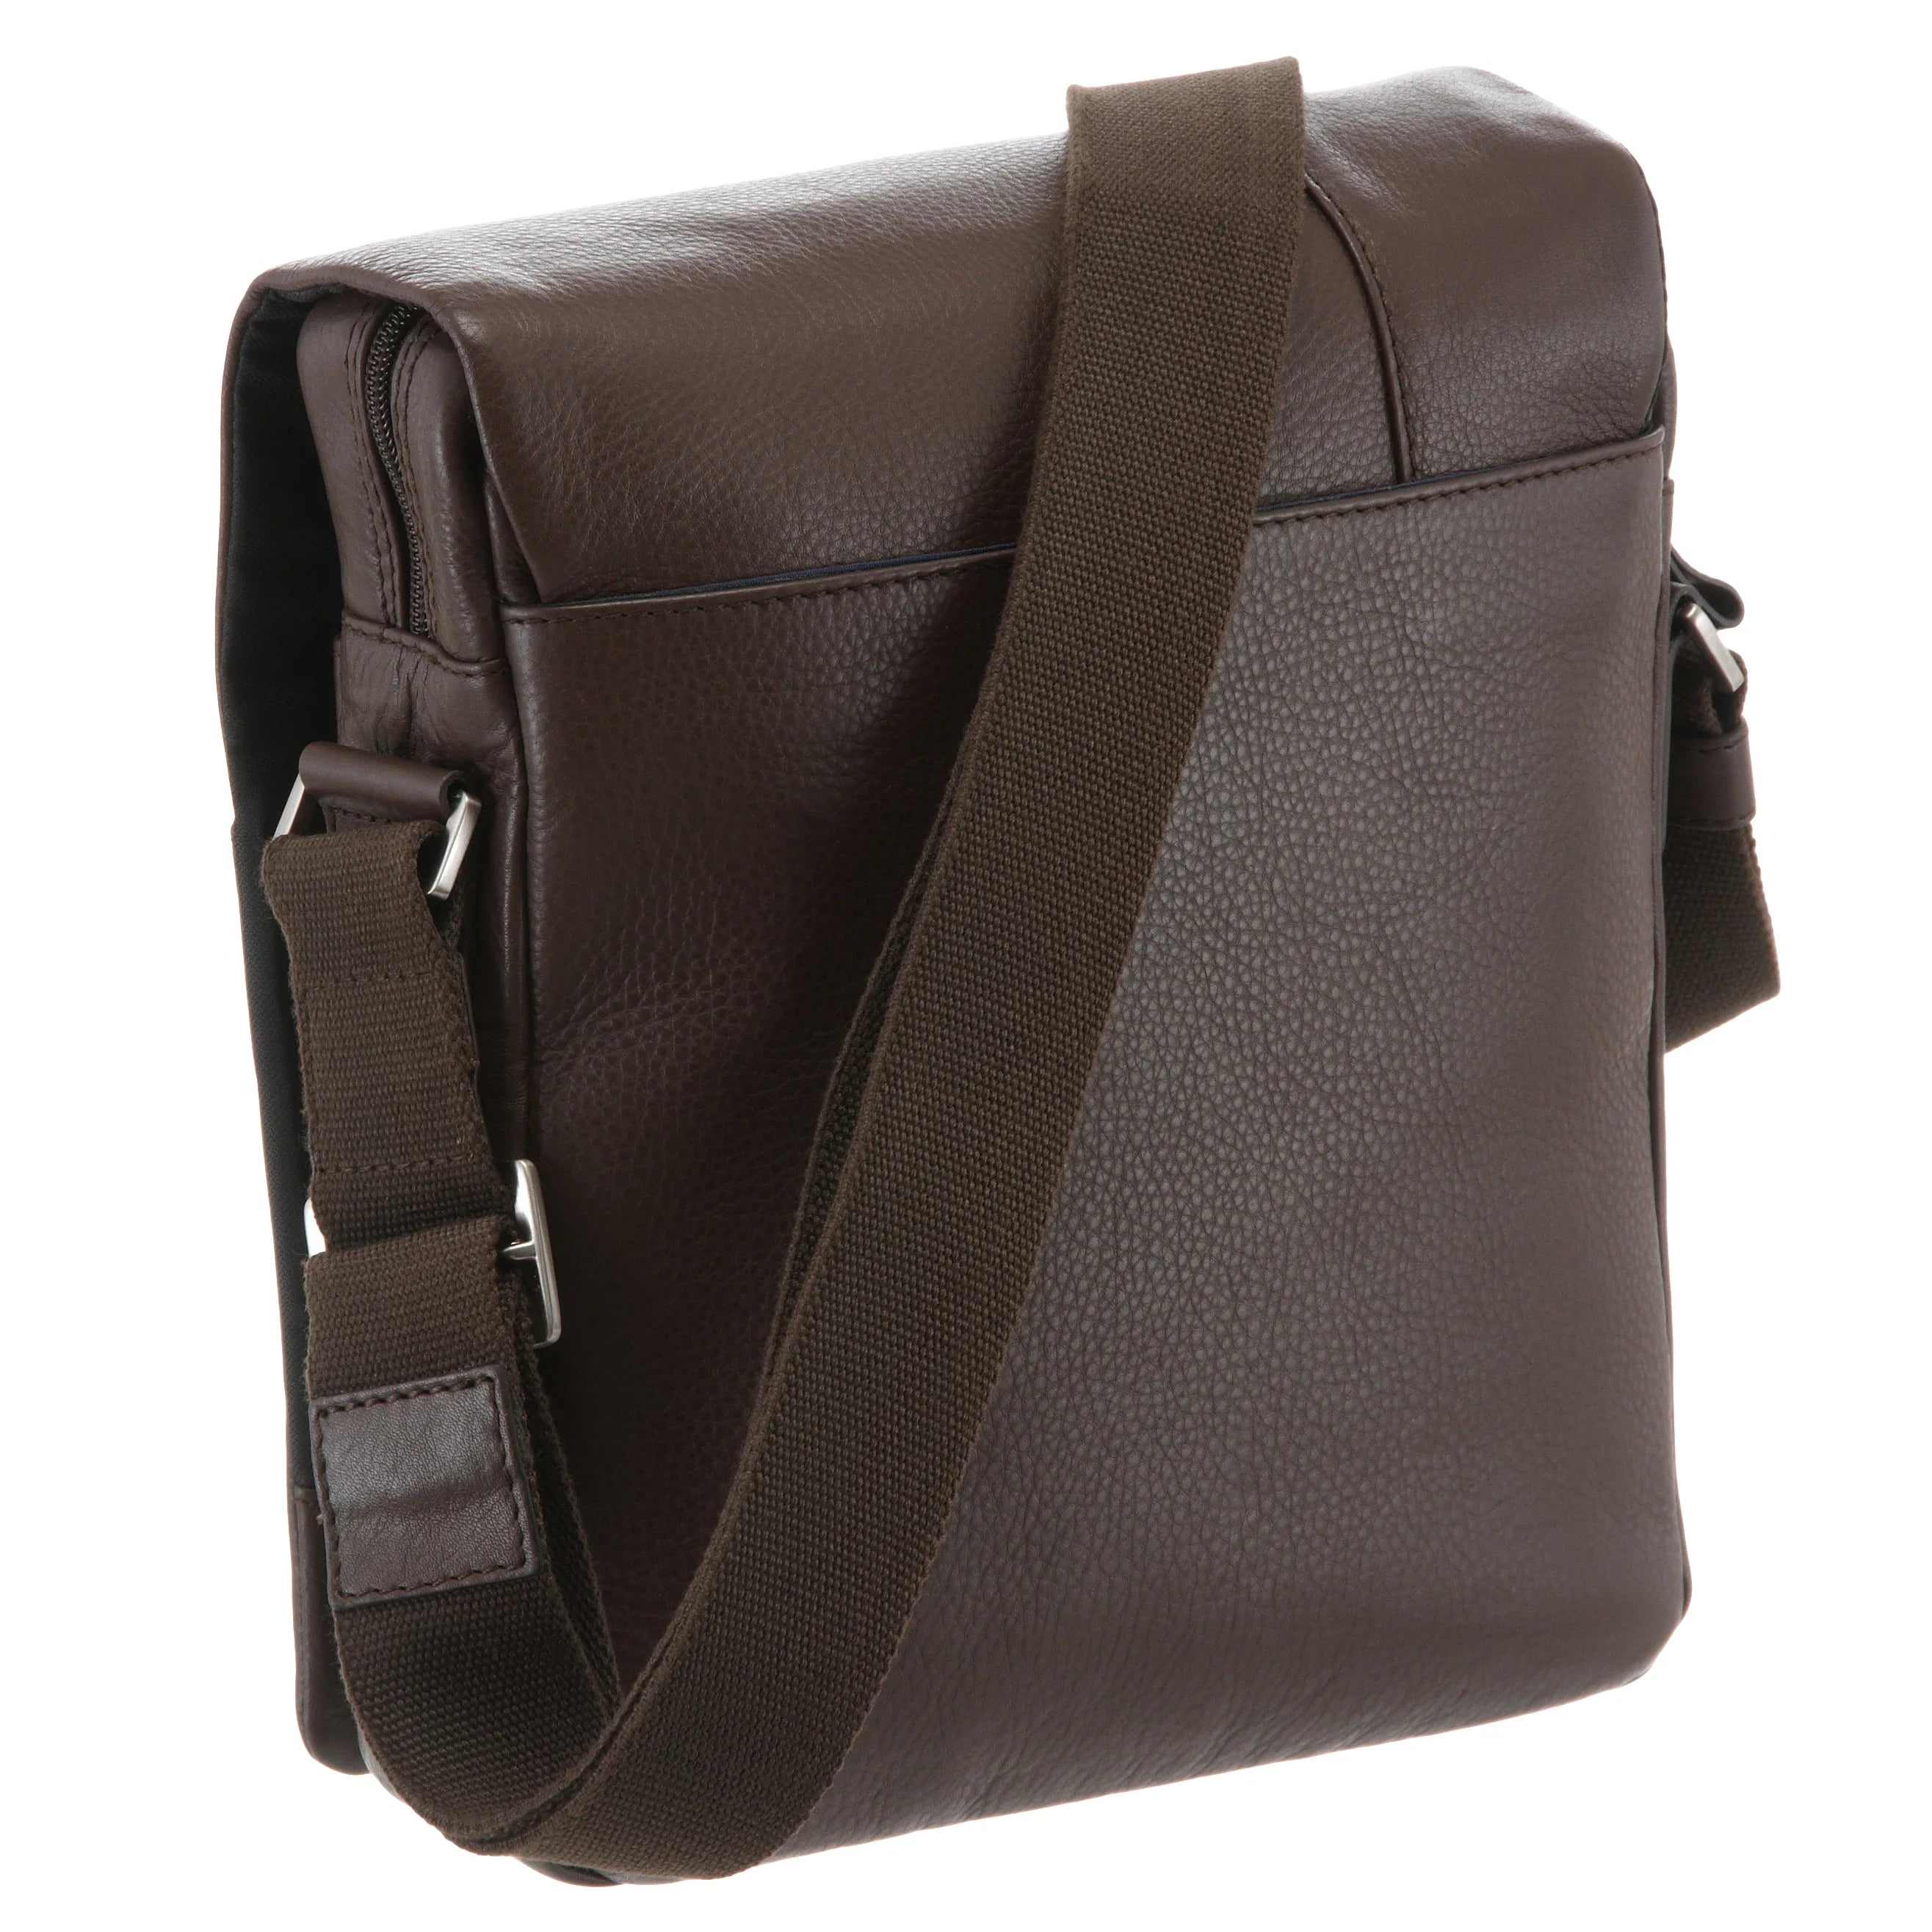 Esquire Sydney shoulder bag 28 cm - brown